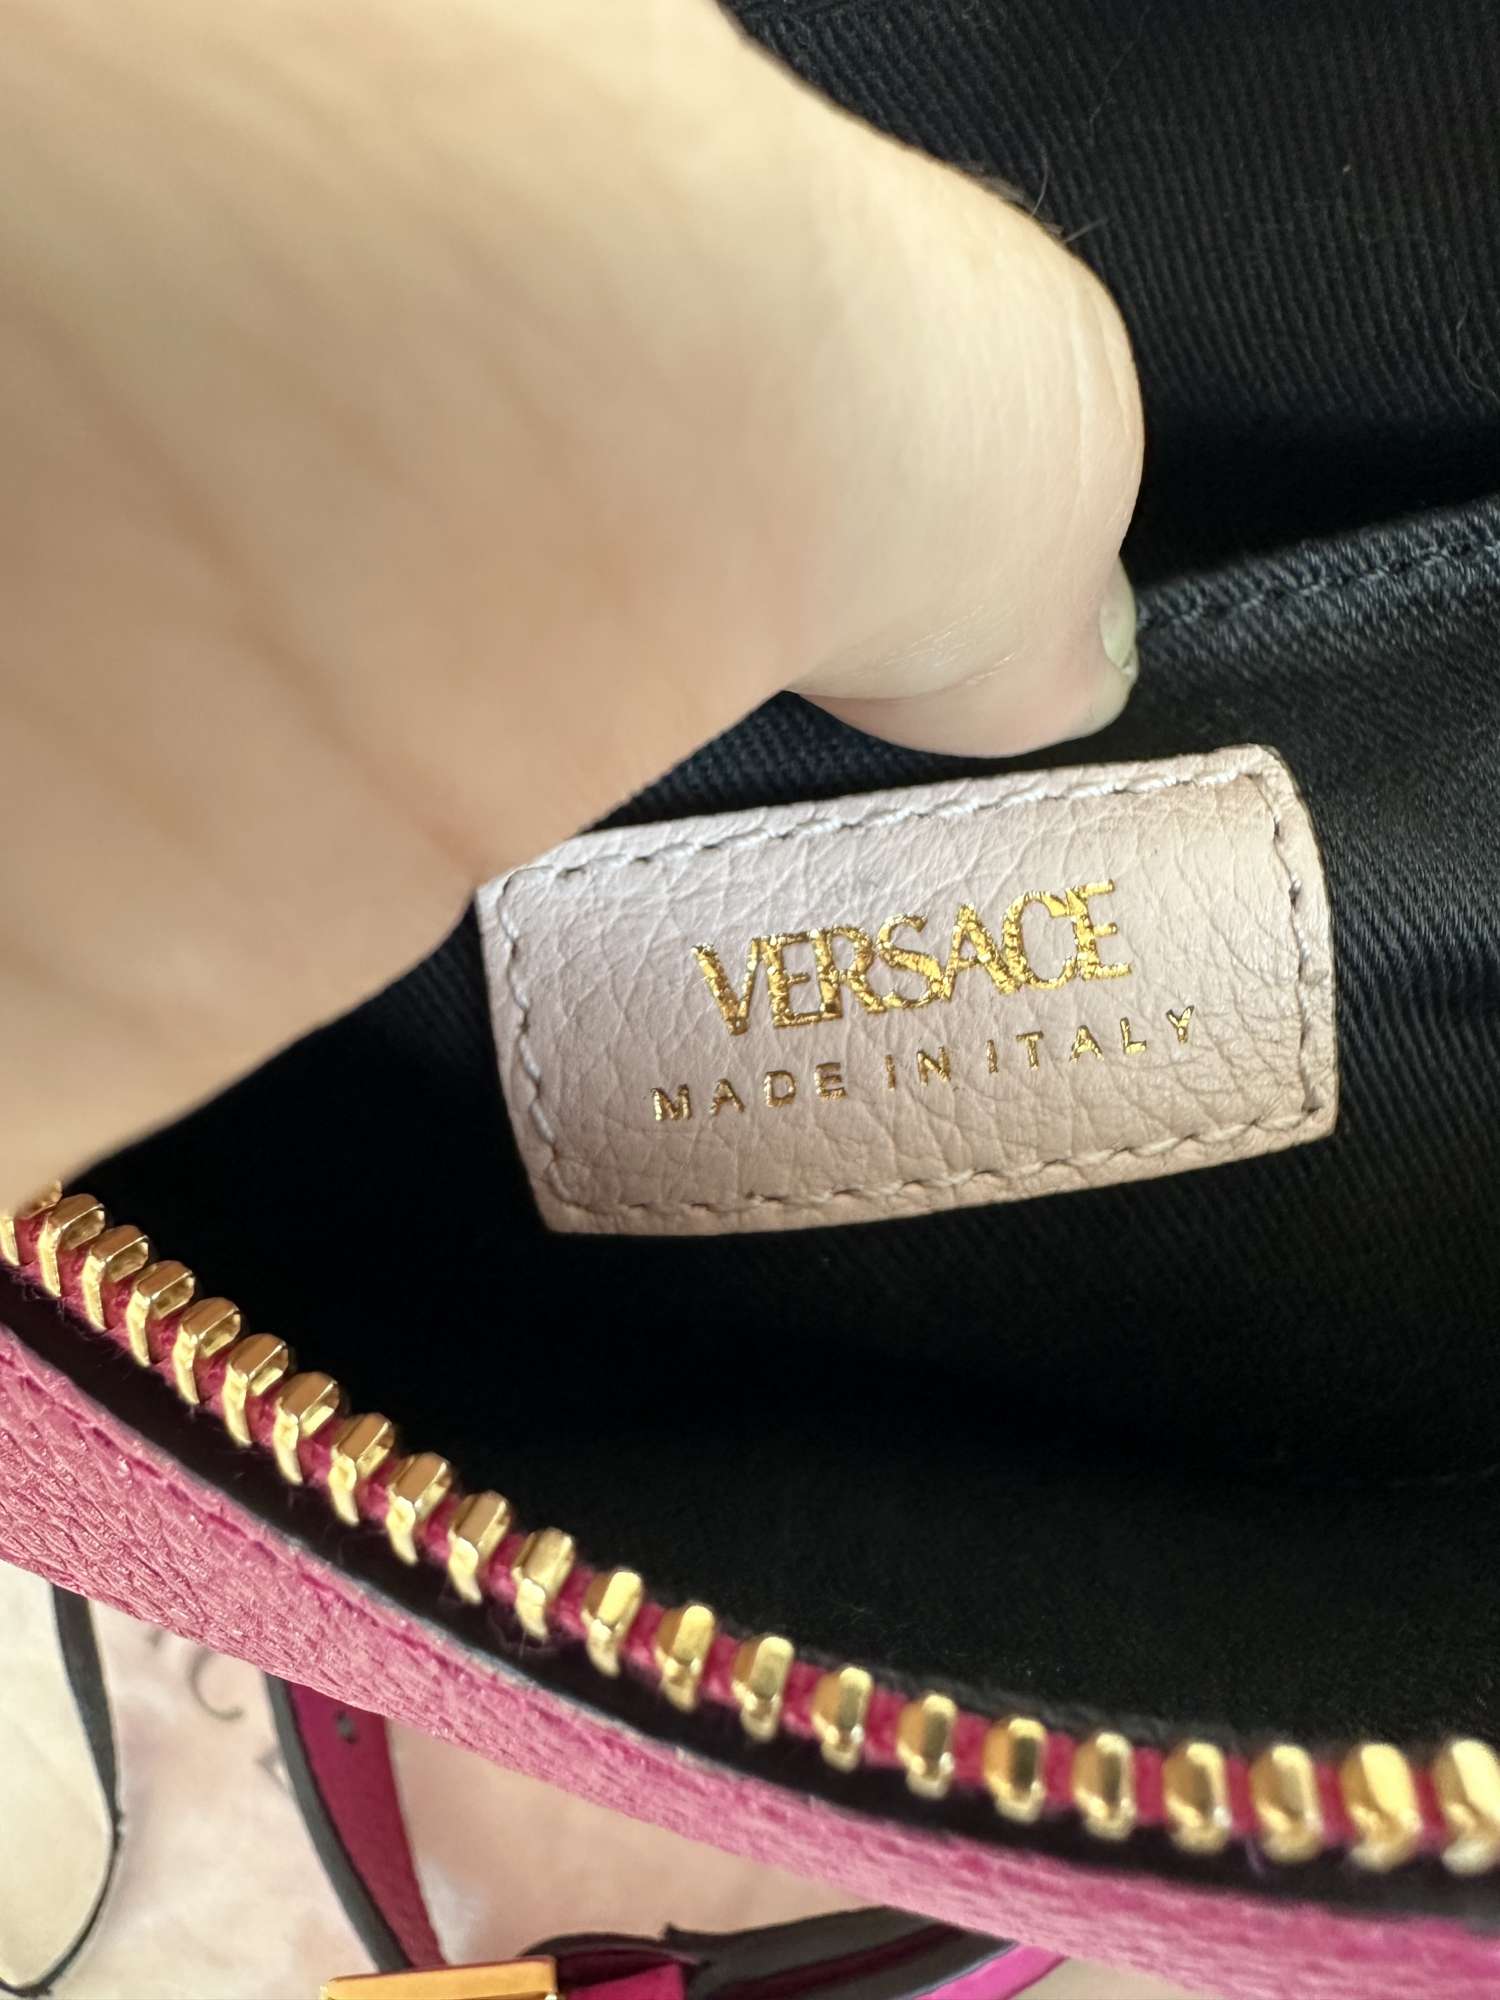 Versace virtus camera bag